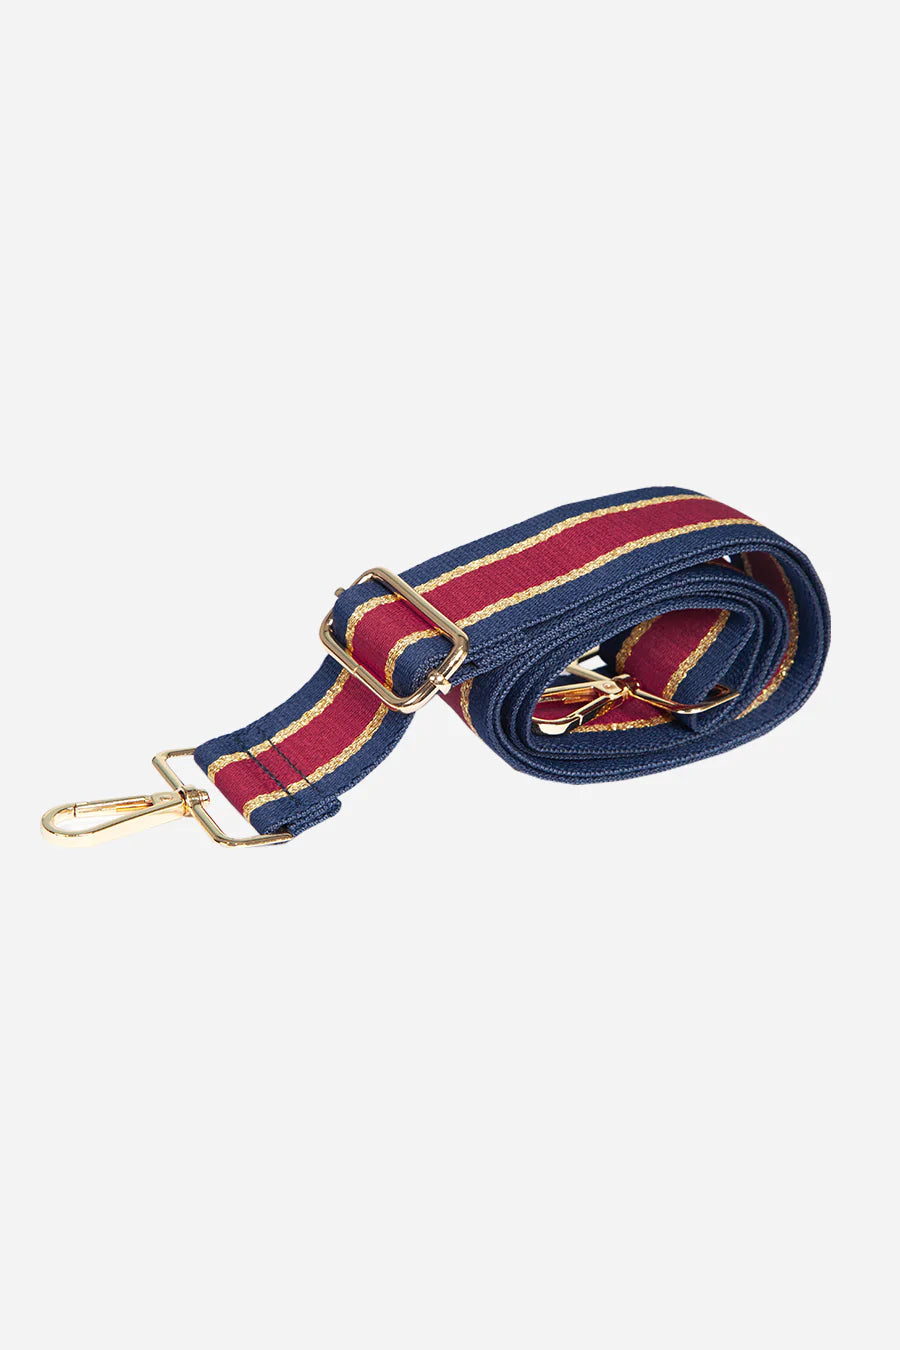 Crossbody Bag Strap in Navy Blue Red Glitter Stripe